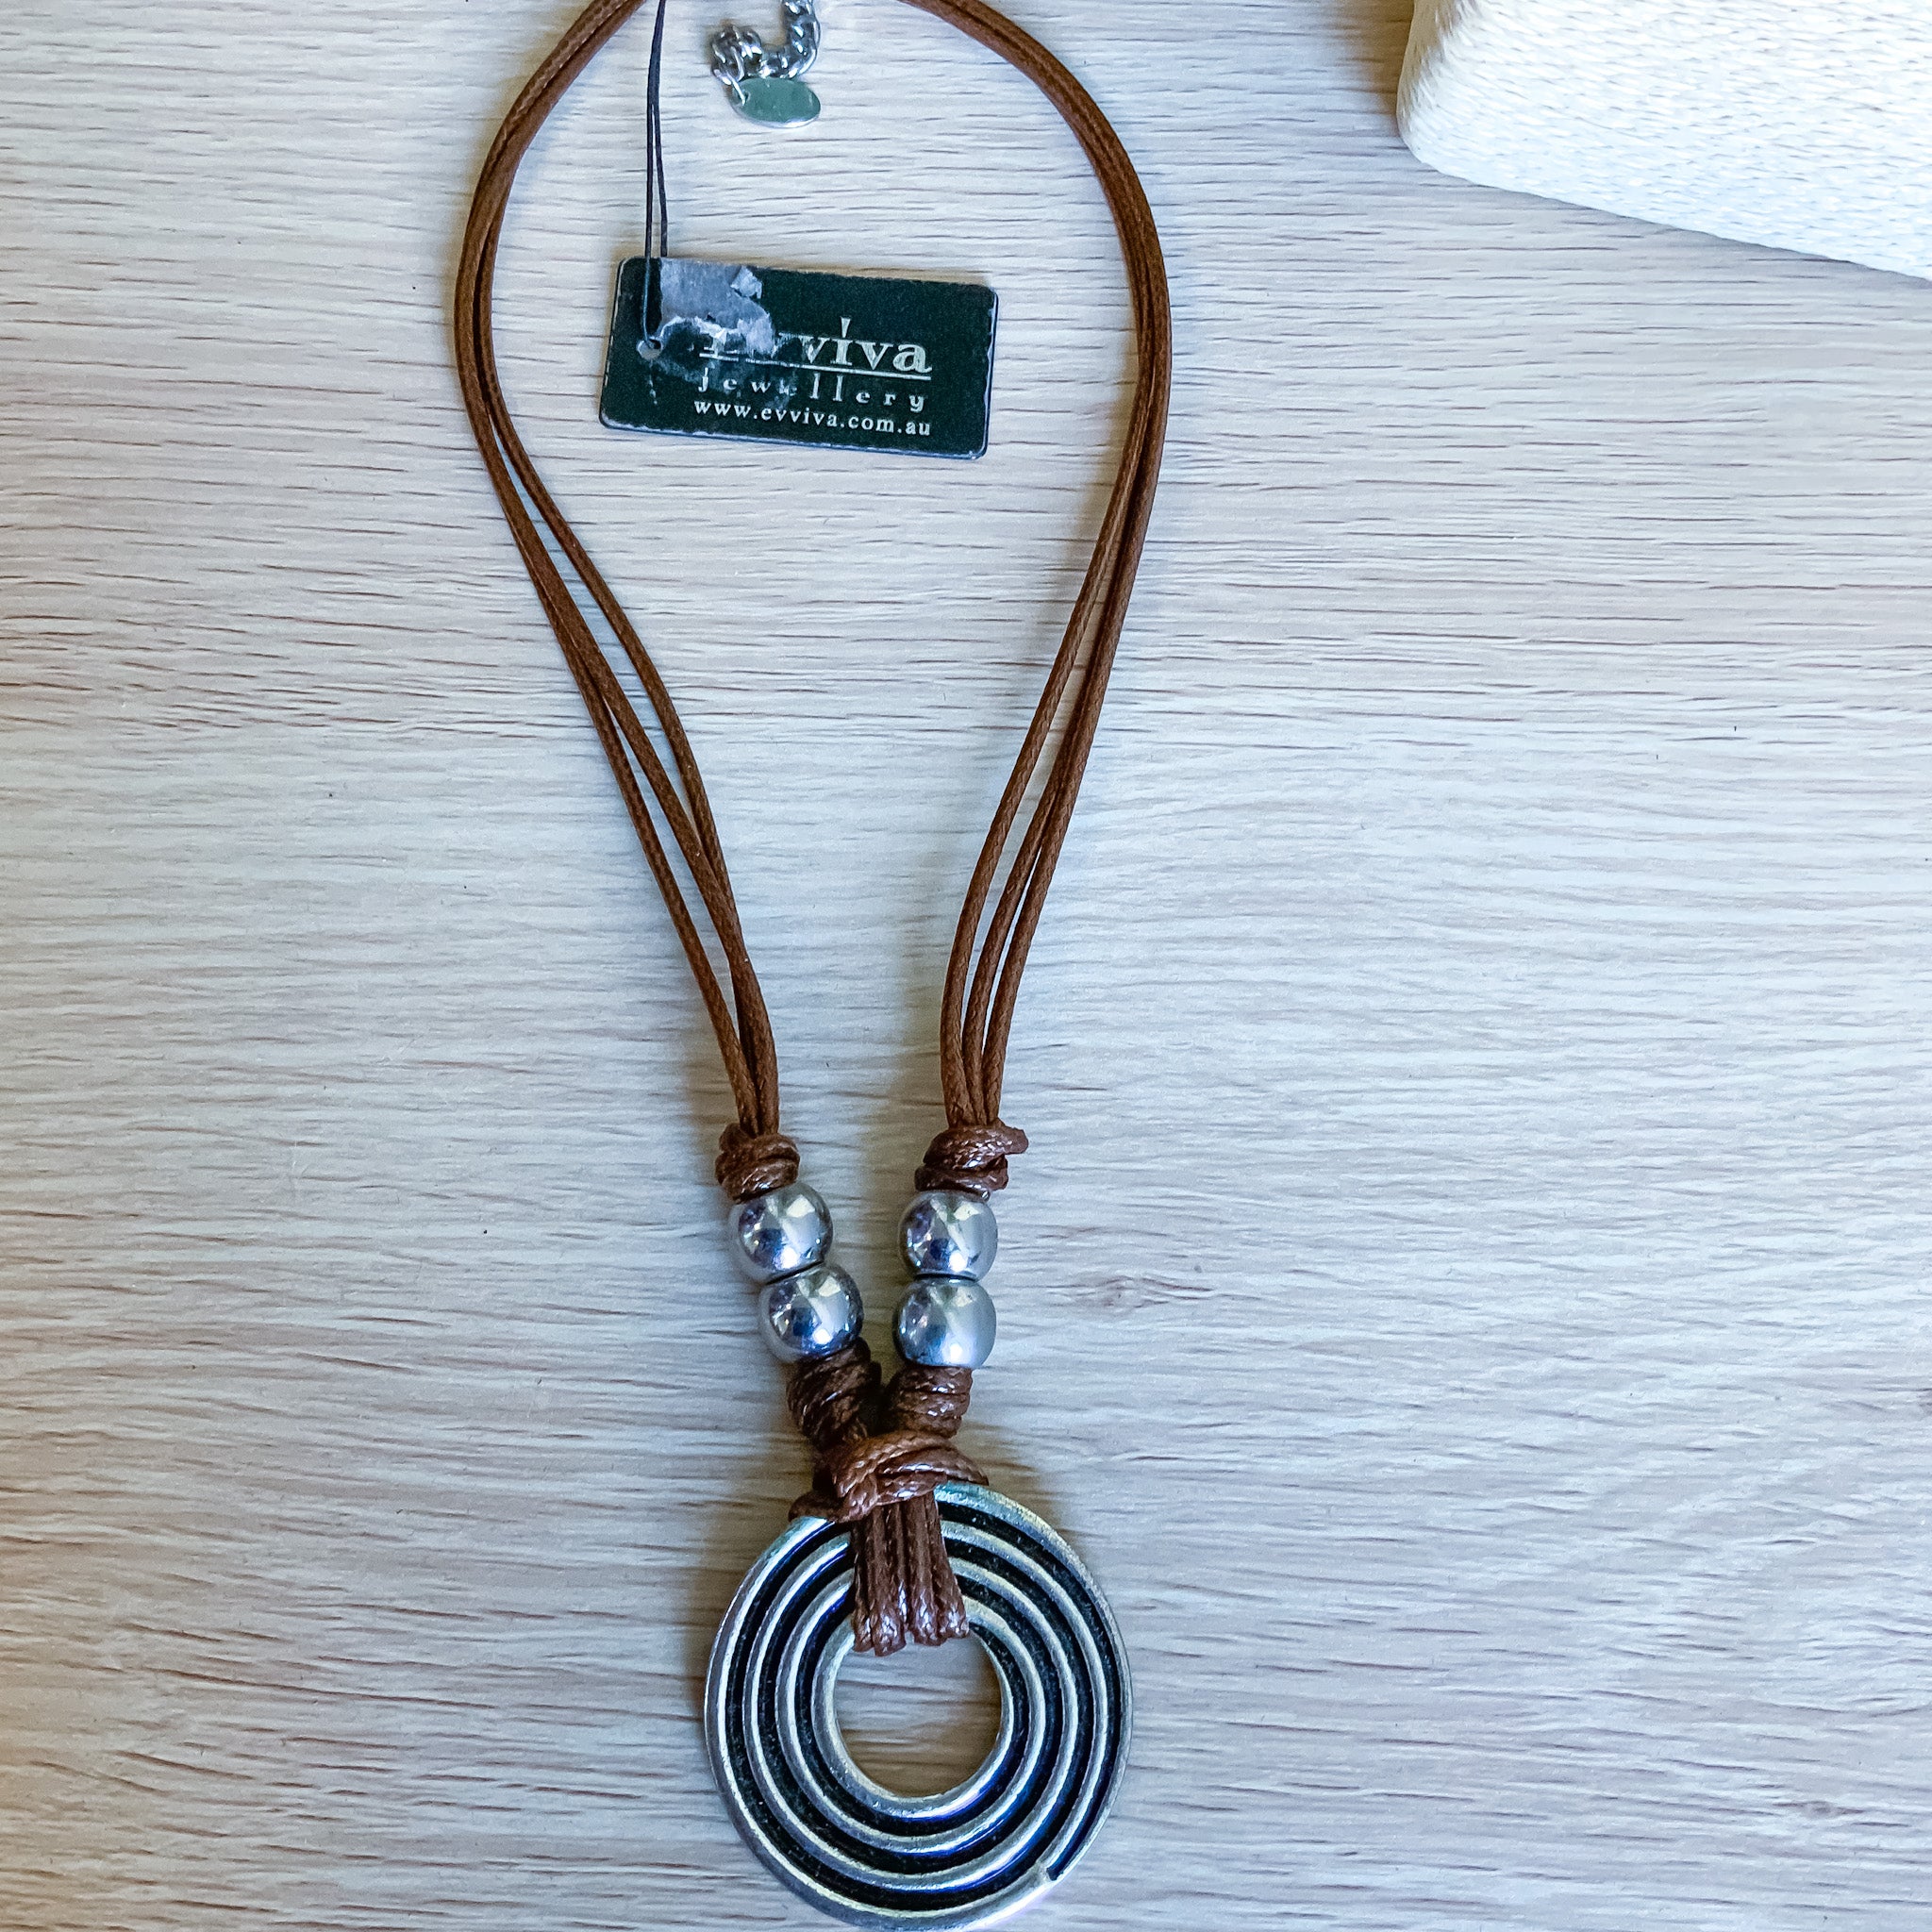 BNWT EVIVVA Ethnic Style Circle Pendant Leather Necklace